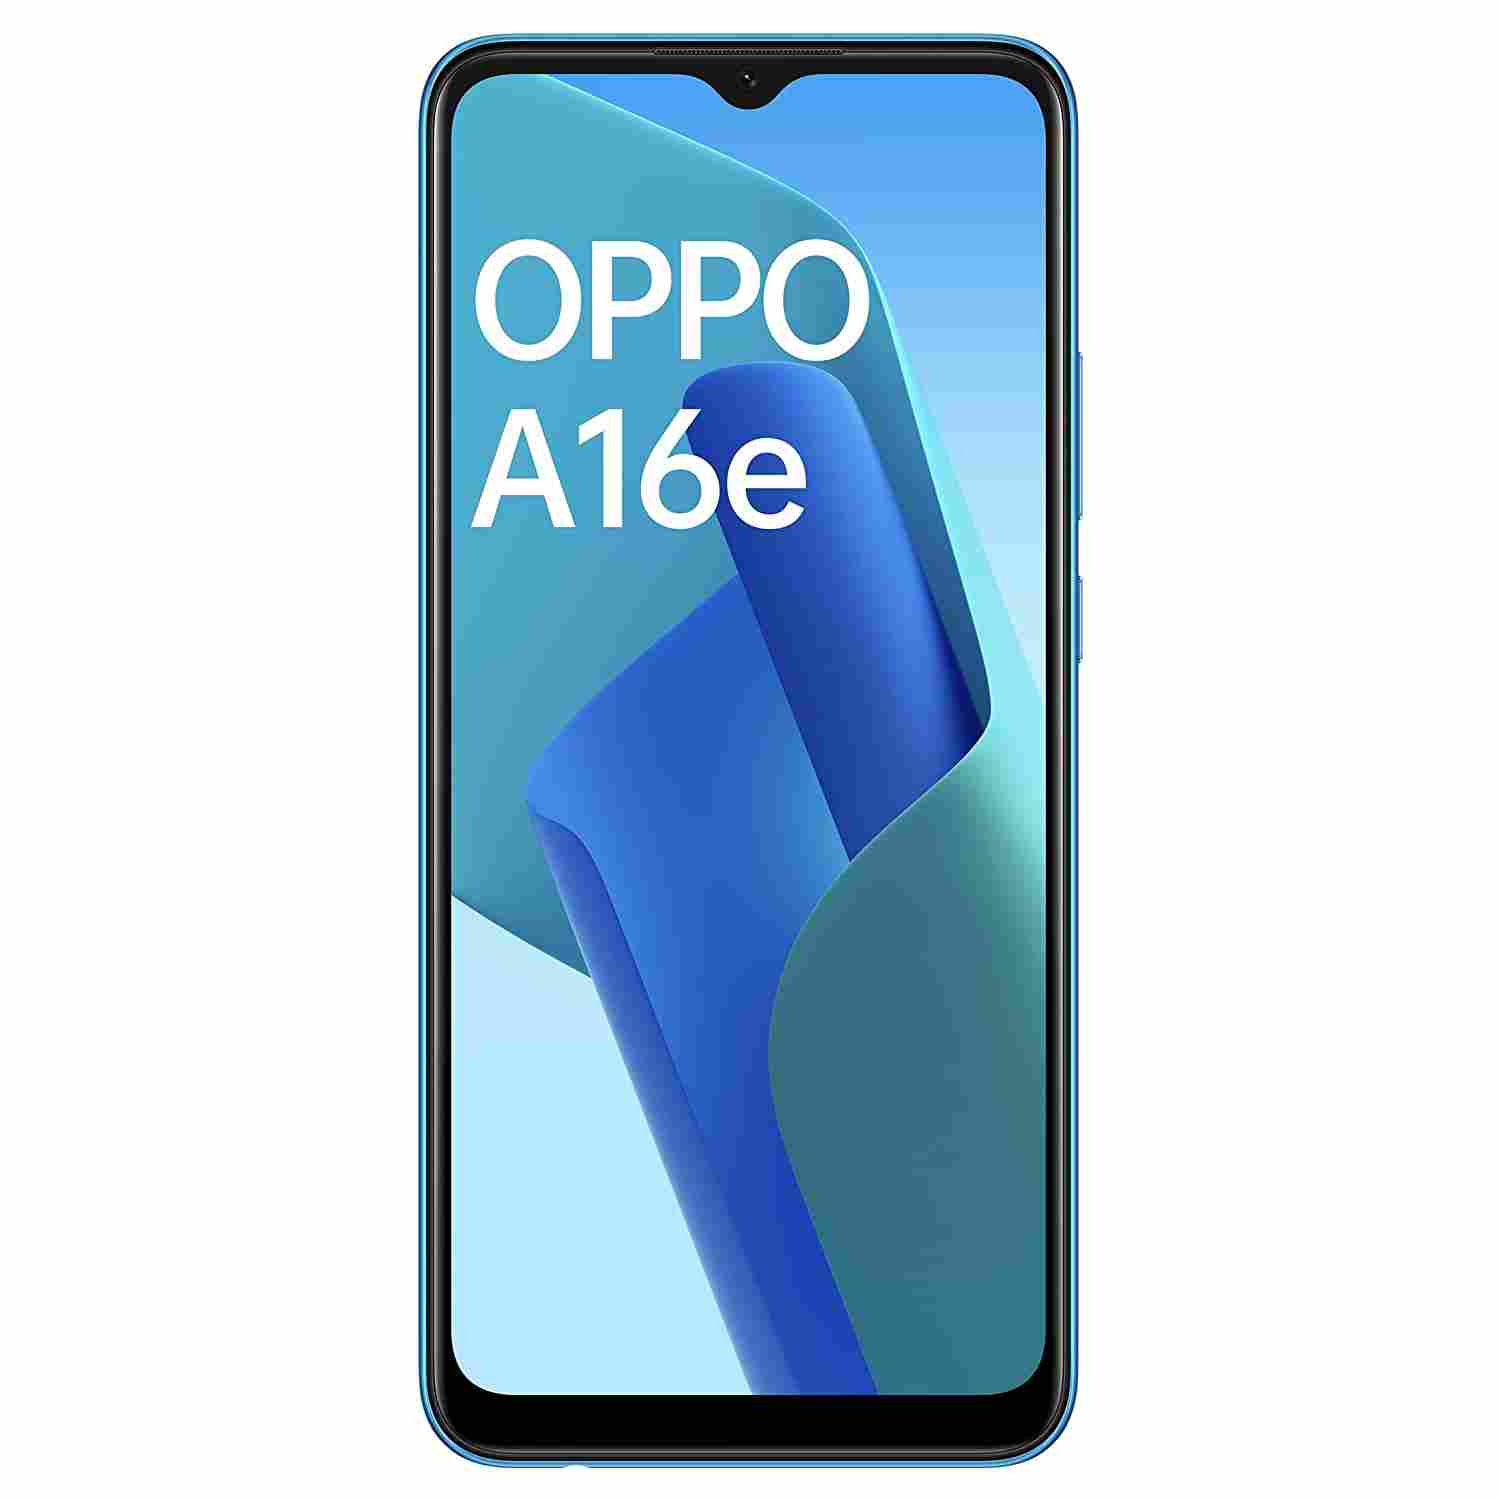 Oppo A16e Features